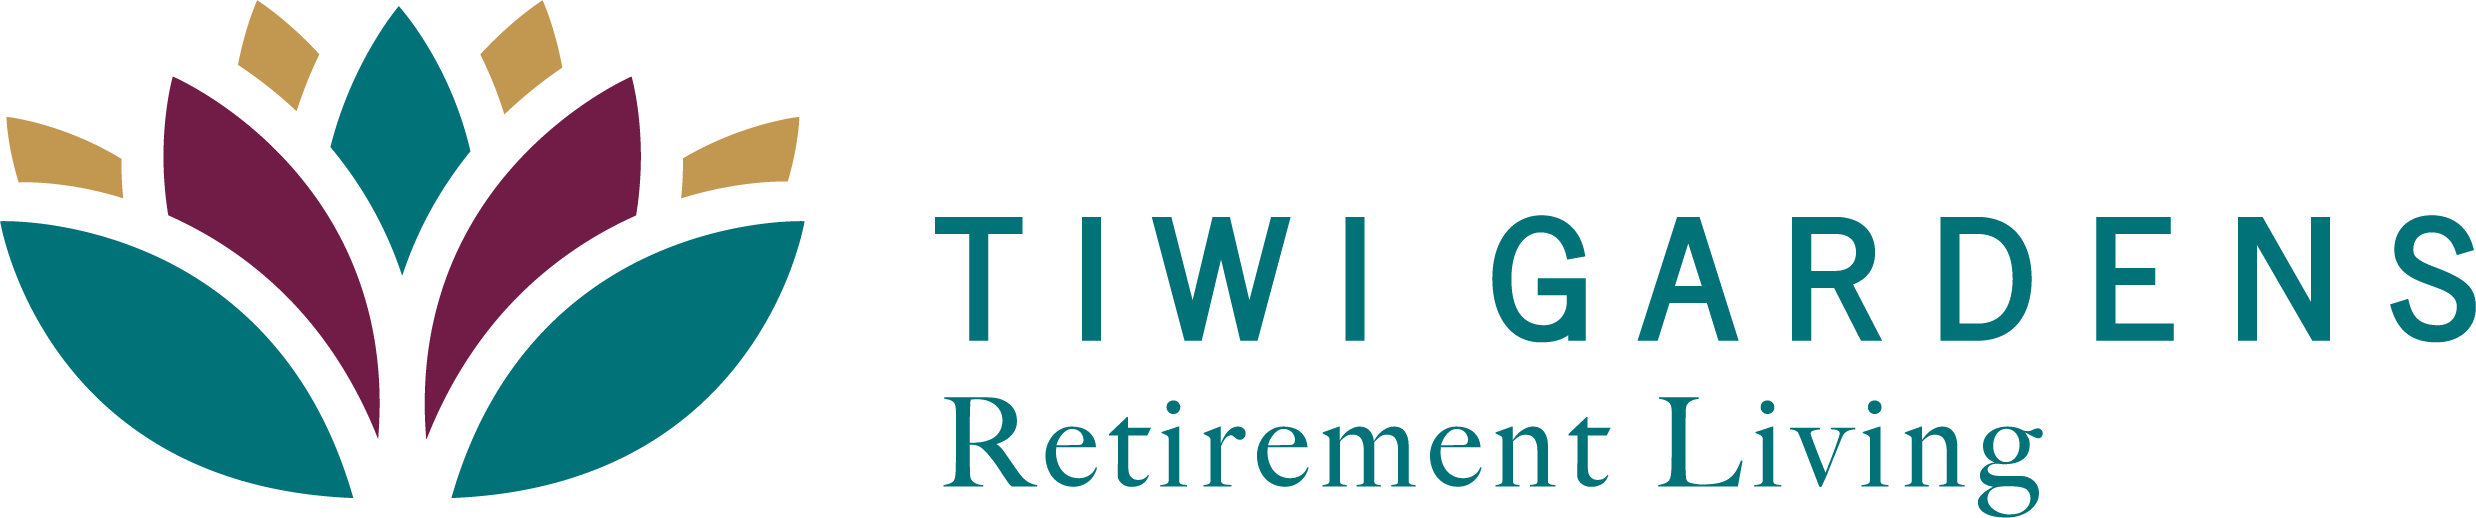 Tiwi Gardens Retirement Living Logo